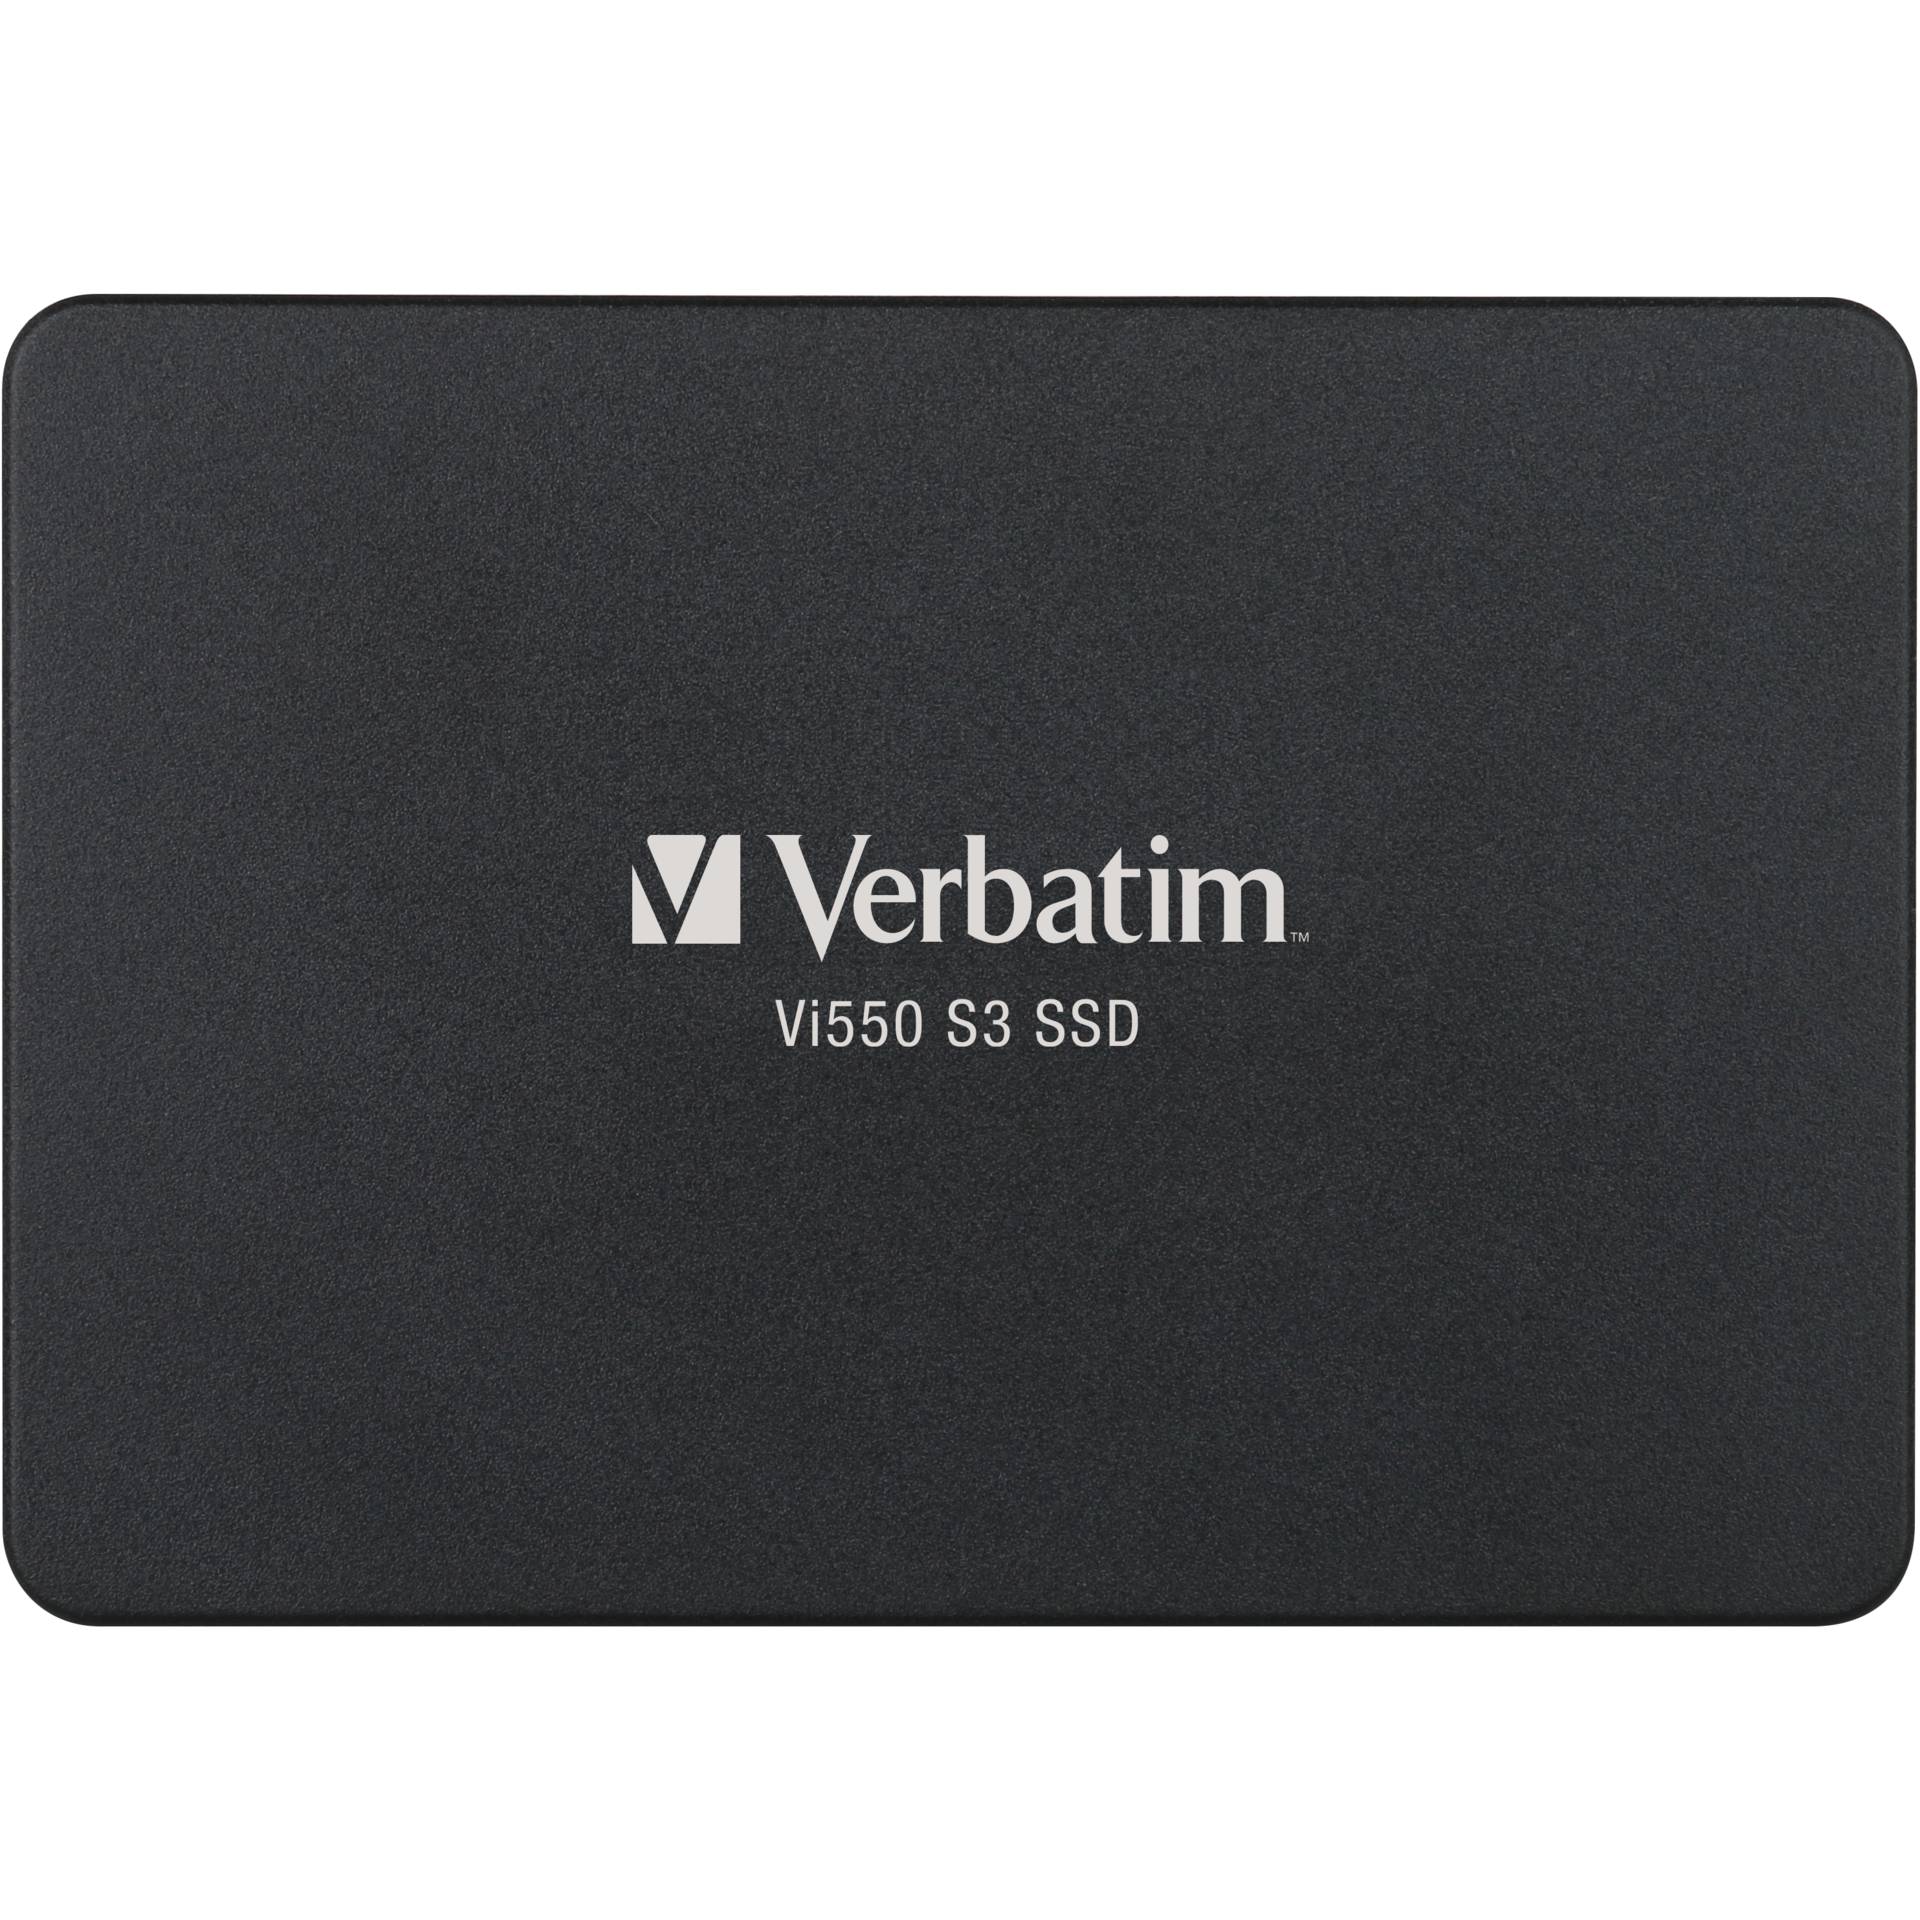 512 GB SSD Verbatim Vi550 S3 SATA 6Gb/s 6,4cm/ 2.5 Zoll lesen: 560MB/s, schreiben: 535MB/s, TBW: 360TB